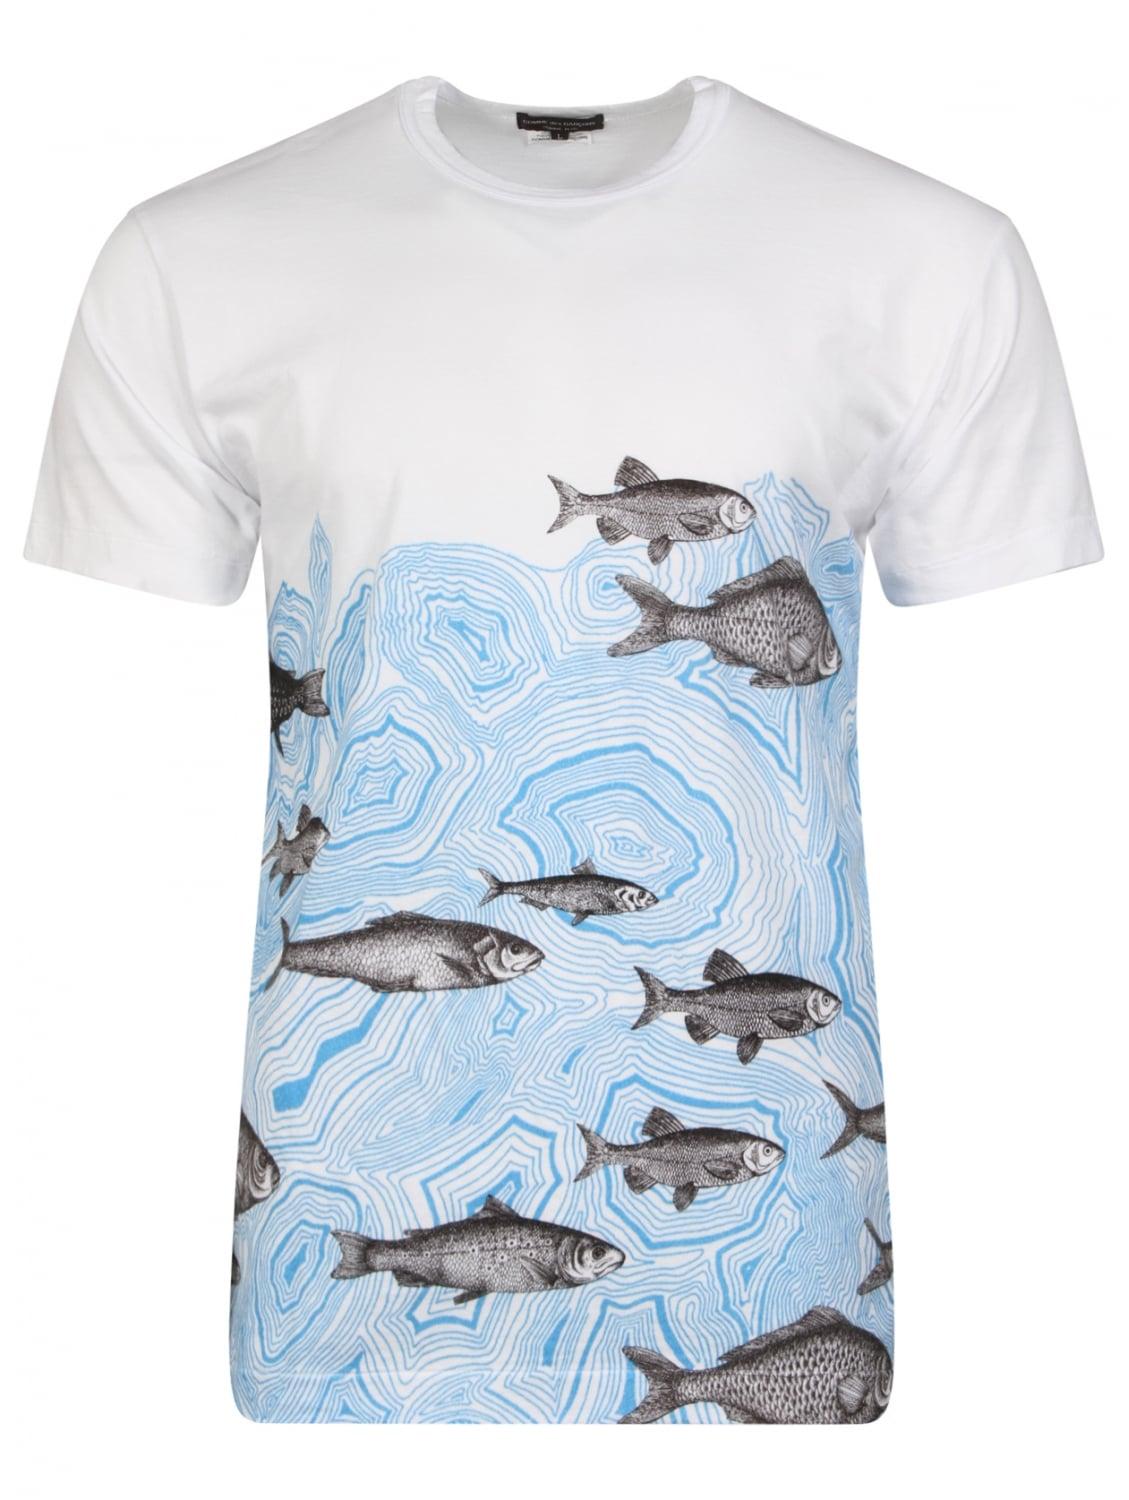 Comme des Garçons Cotton Fornasetti Fish Print T-shirt White for Men - Lyst